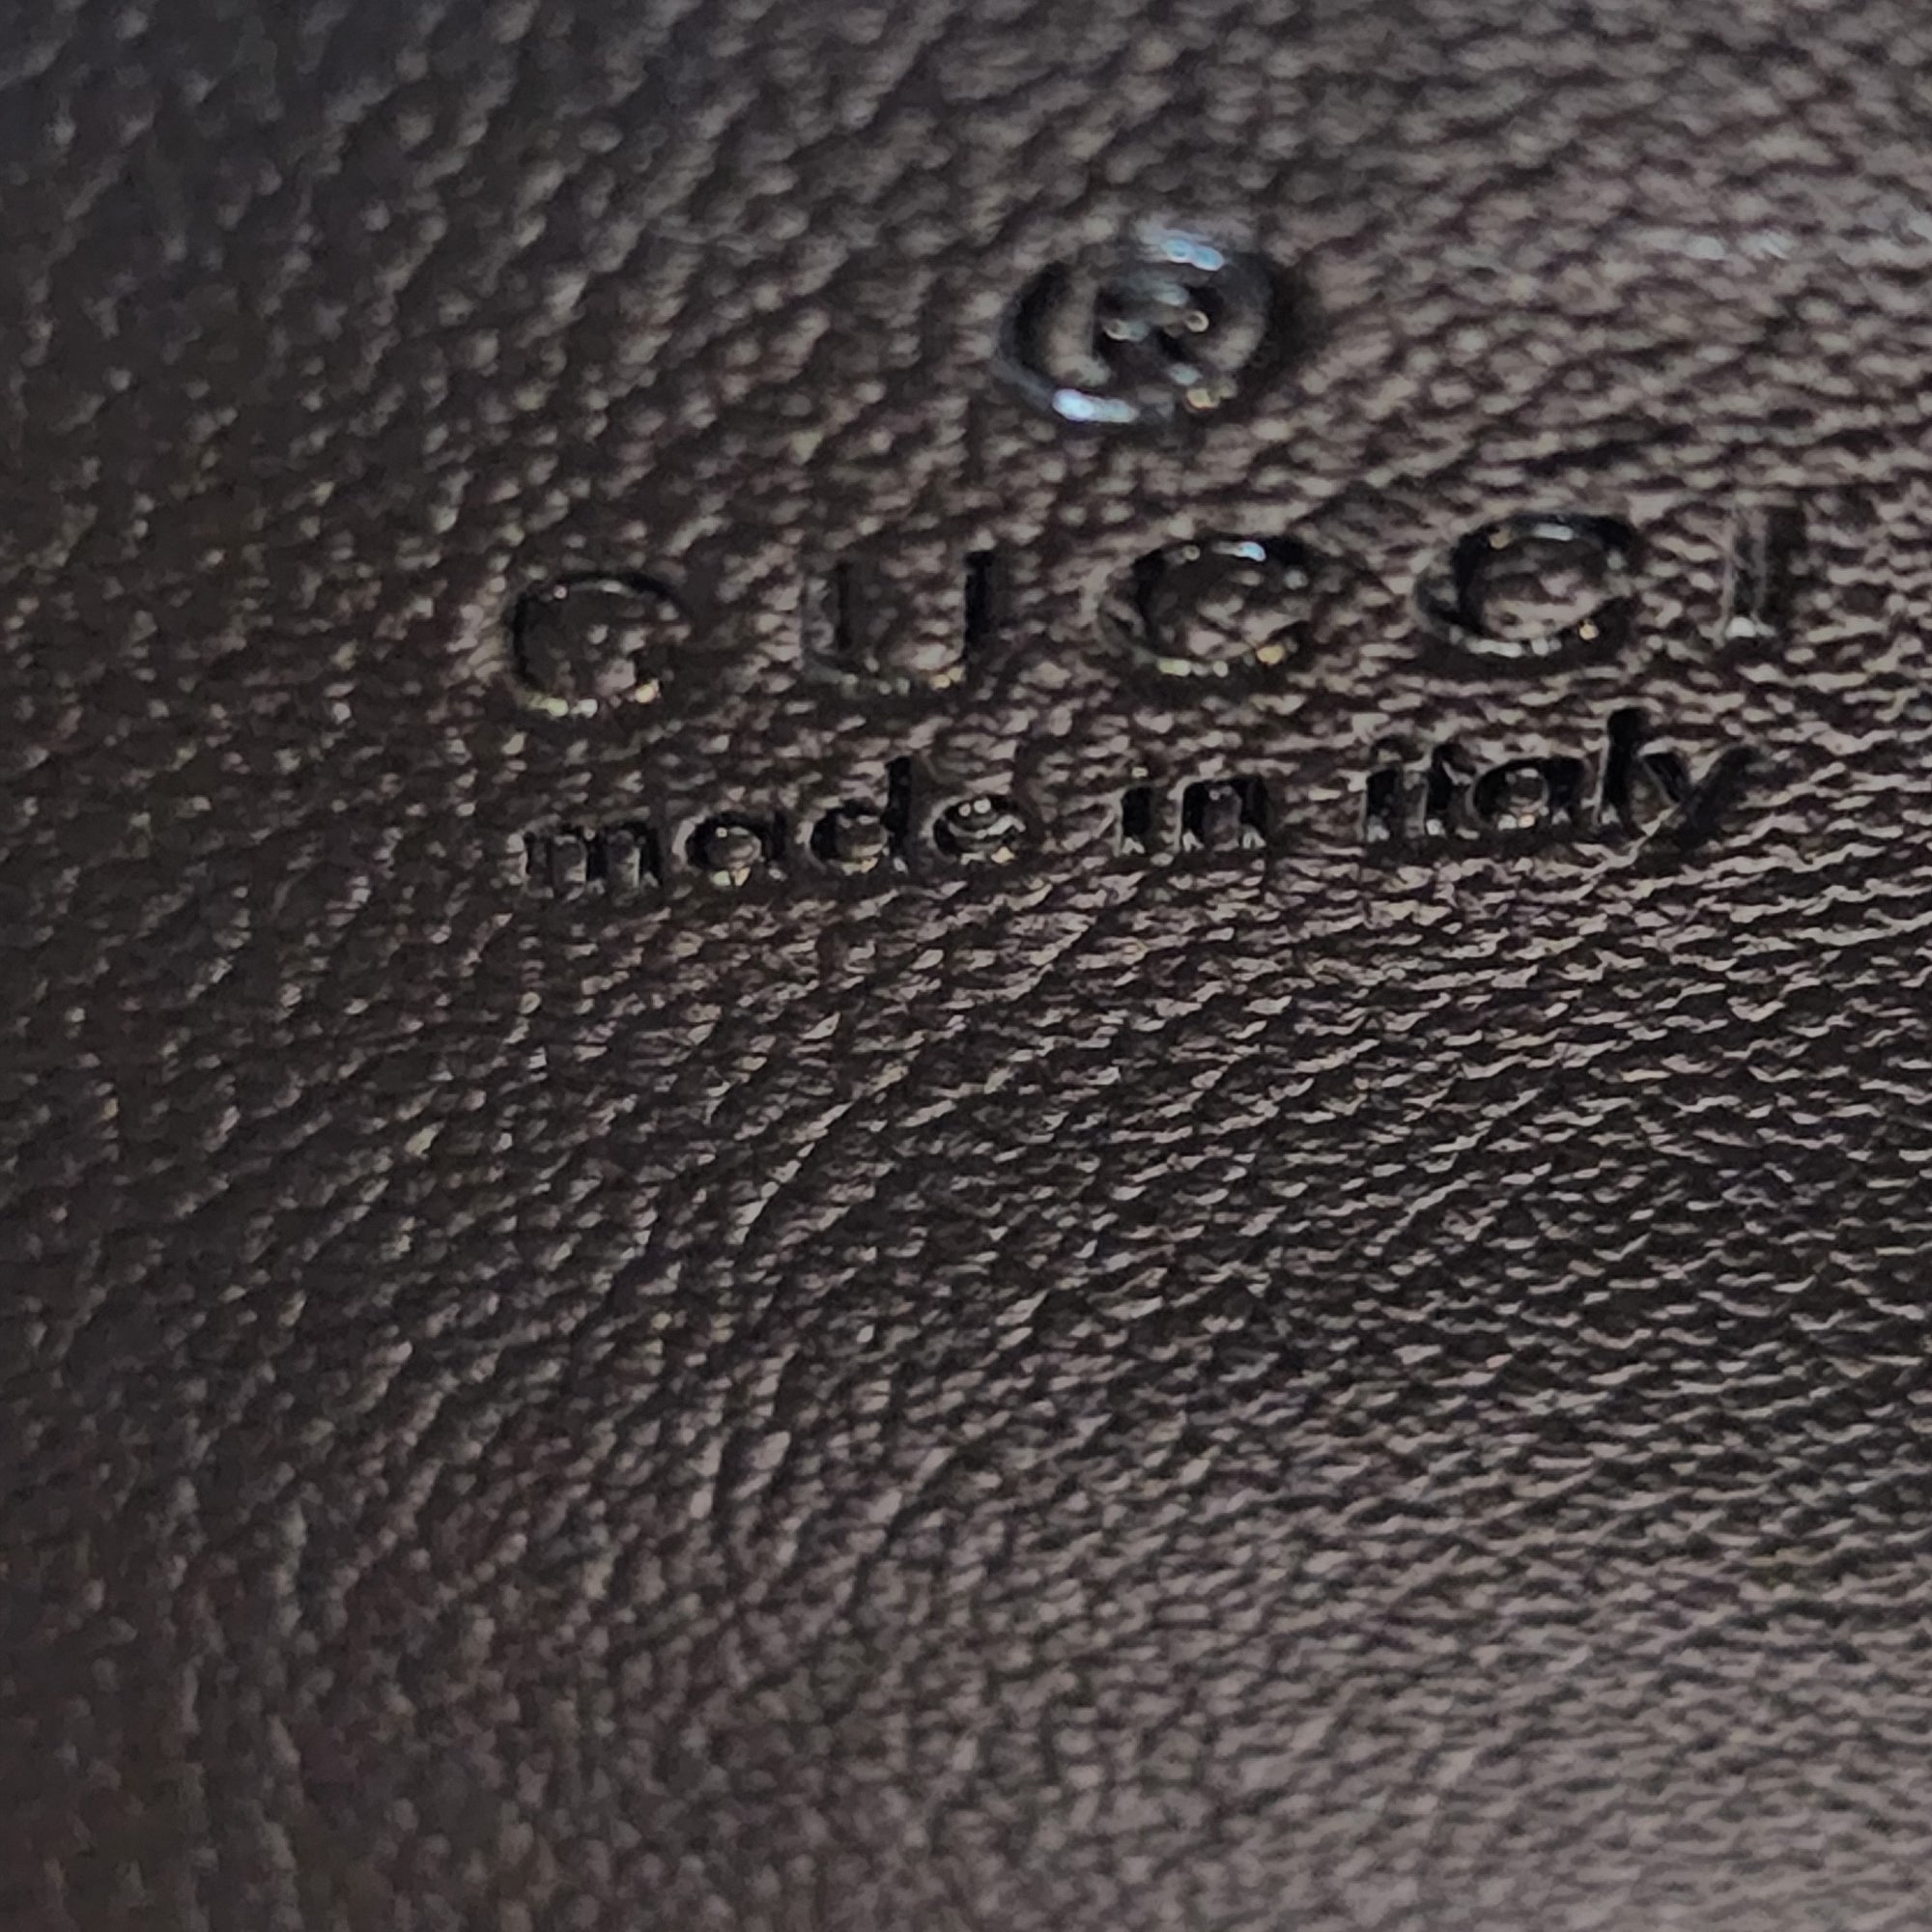 Louis Vuitton New Wave vs Gucci Marmont Matelasse, Camera Bag